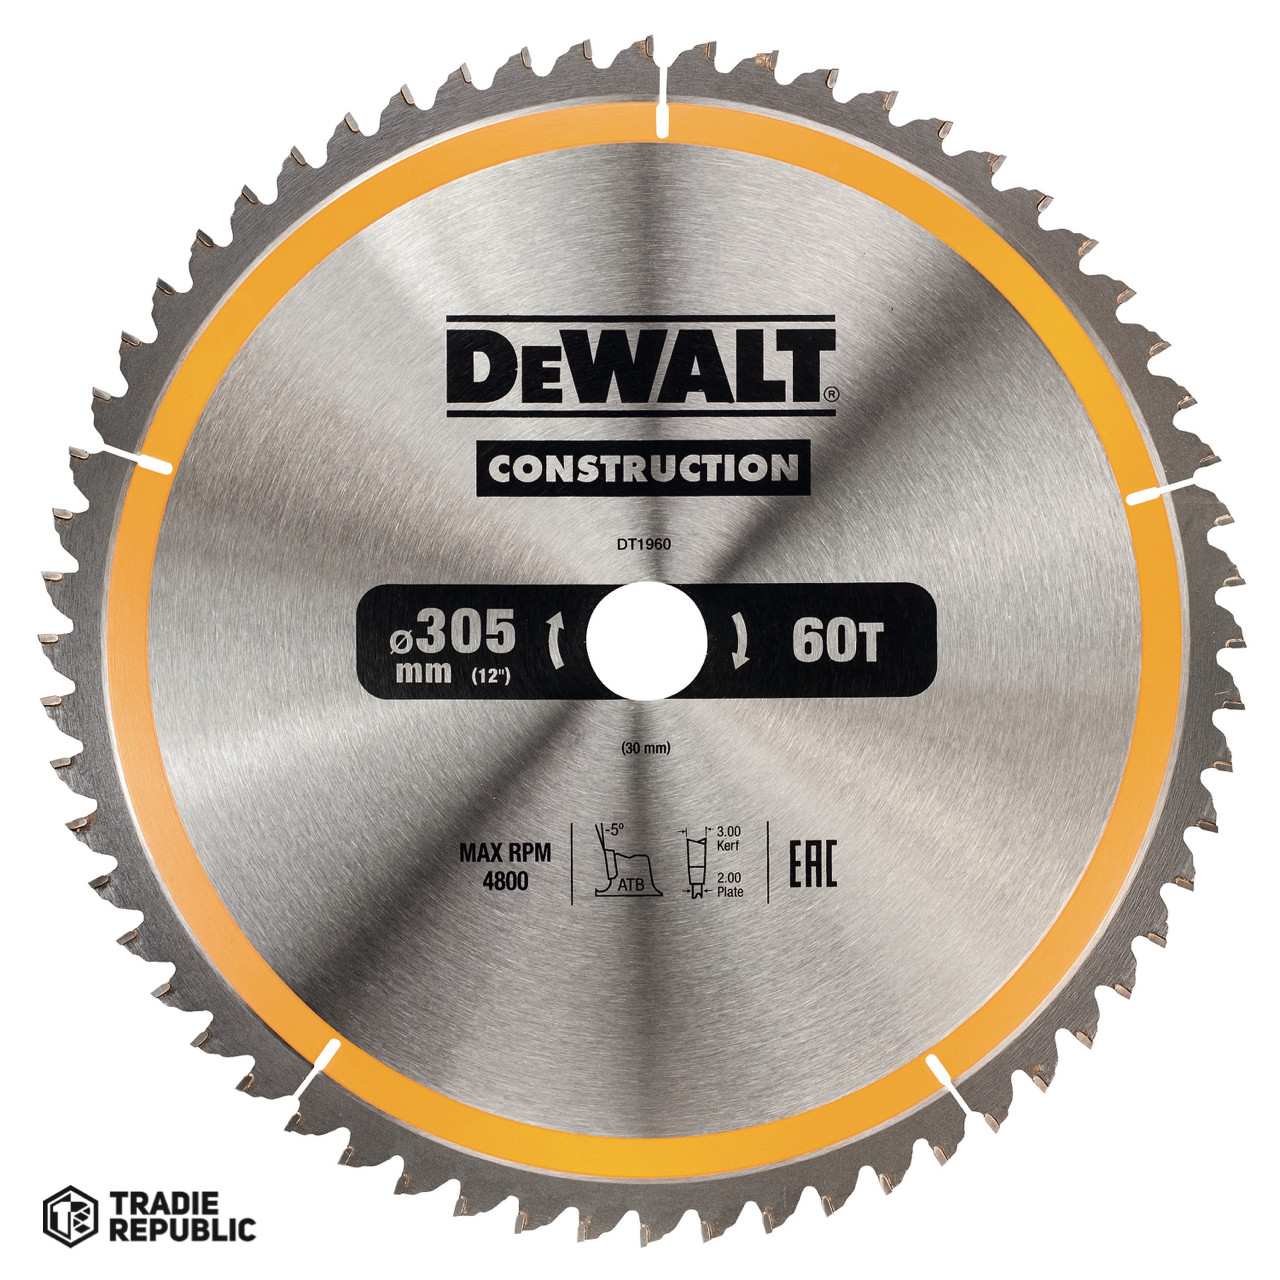 DT1960-QZ DeWalt Saw Blade Construction 305mm x 30 x 60T Wood